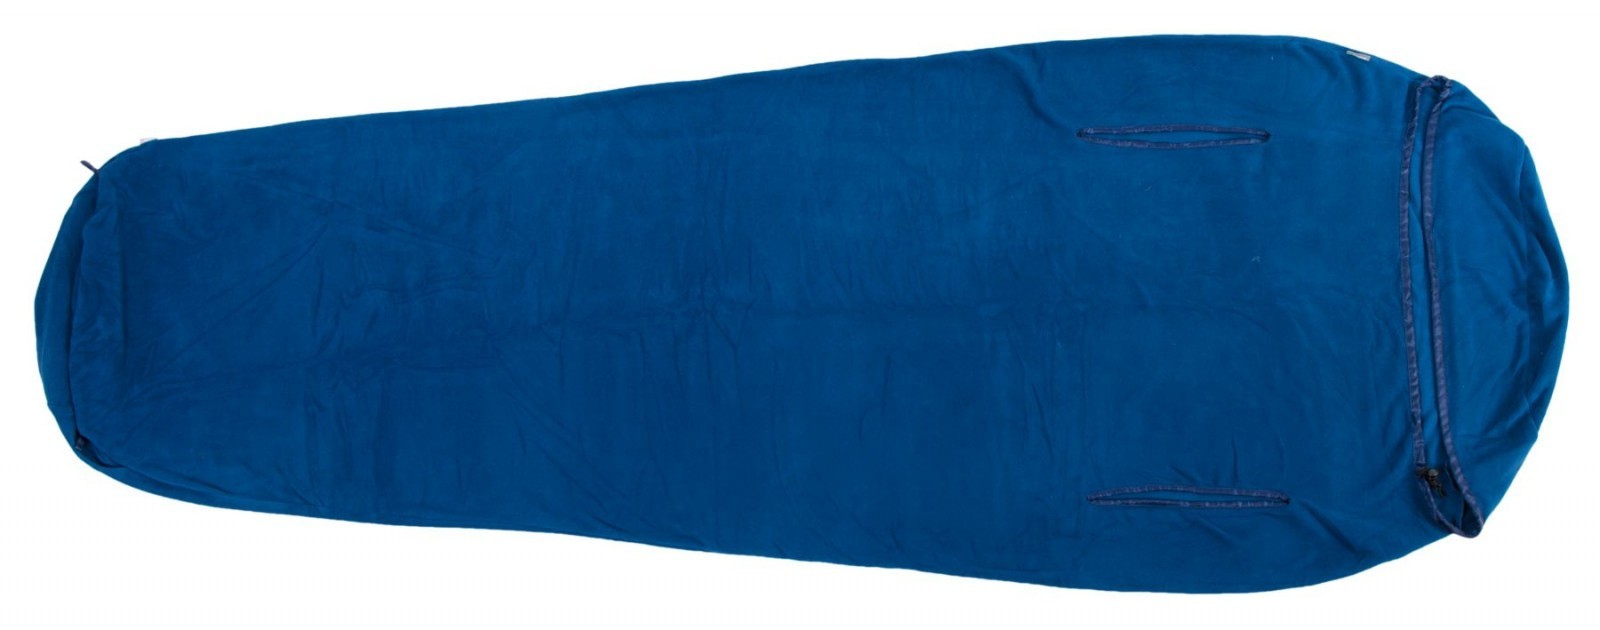 Vložka do spacáku Warmpeace Polartec Micro Mummy 195 cm Barva: světle modrá navy